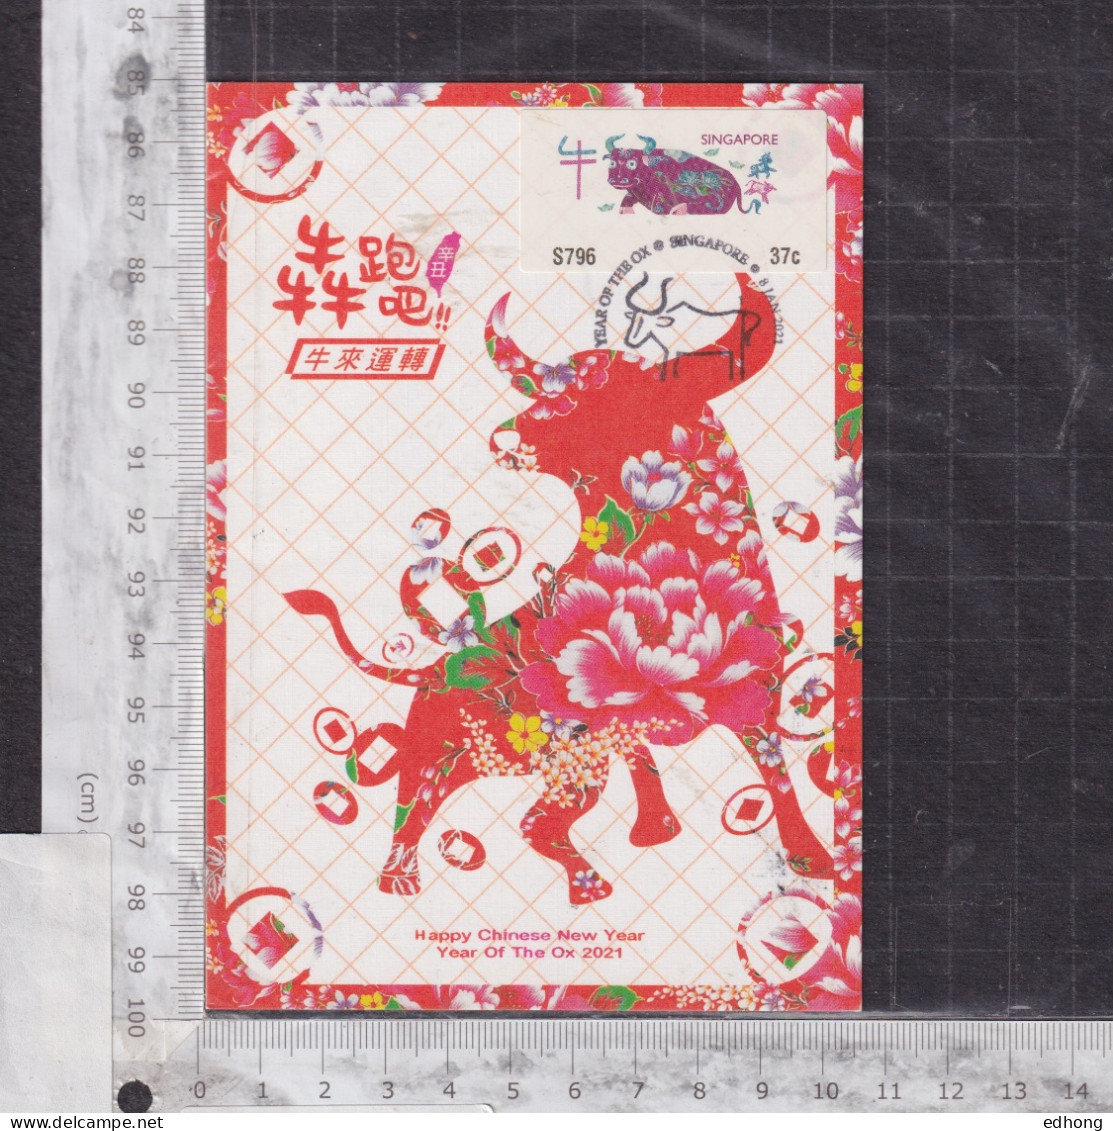 [Carte Maximum / Maximum Card / Maximumkarte] Singapore 2021 | Lunar New Year, Year Of The Ox Postage Label - Anno Nuovo Cinese